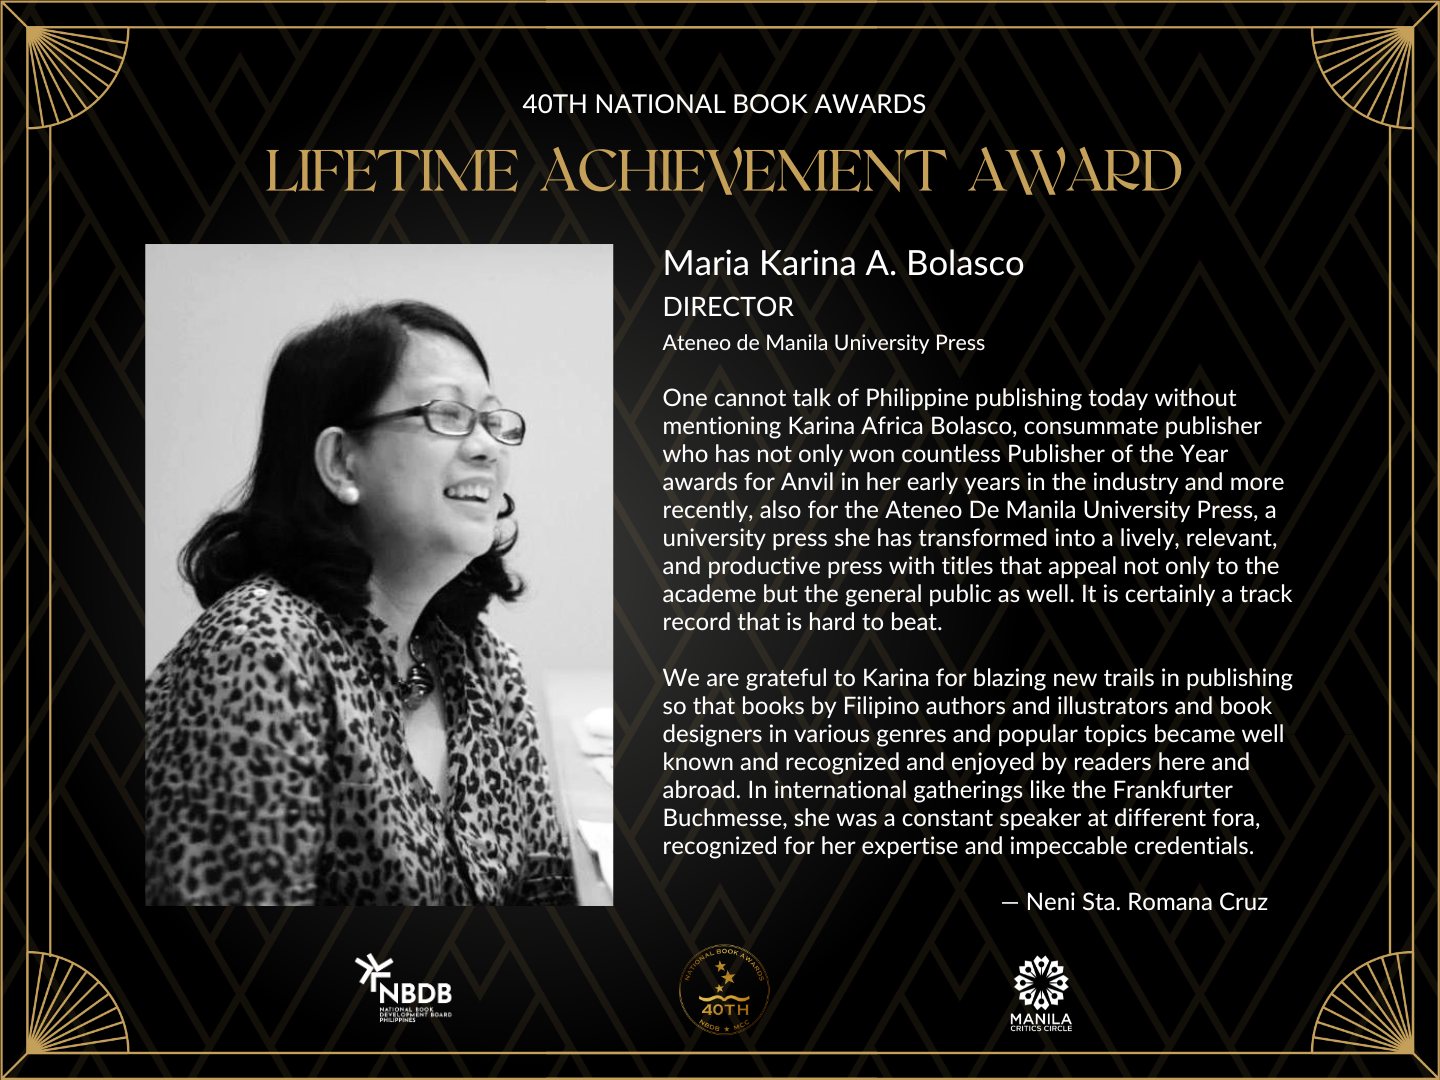 Citation from the National Book Development Board for Maria Karina Bolasco’s Lifetime Achievement Award